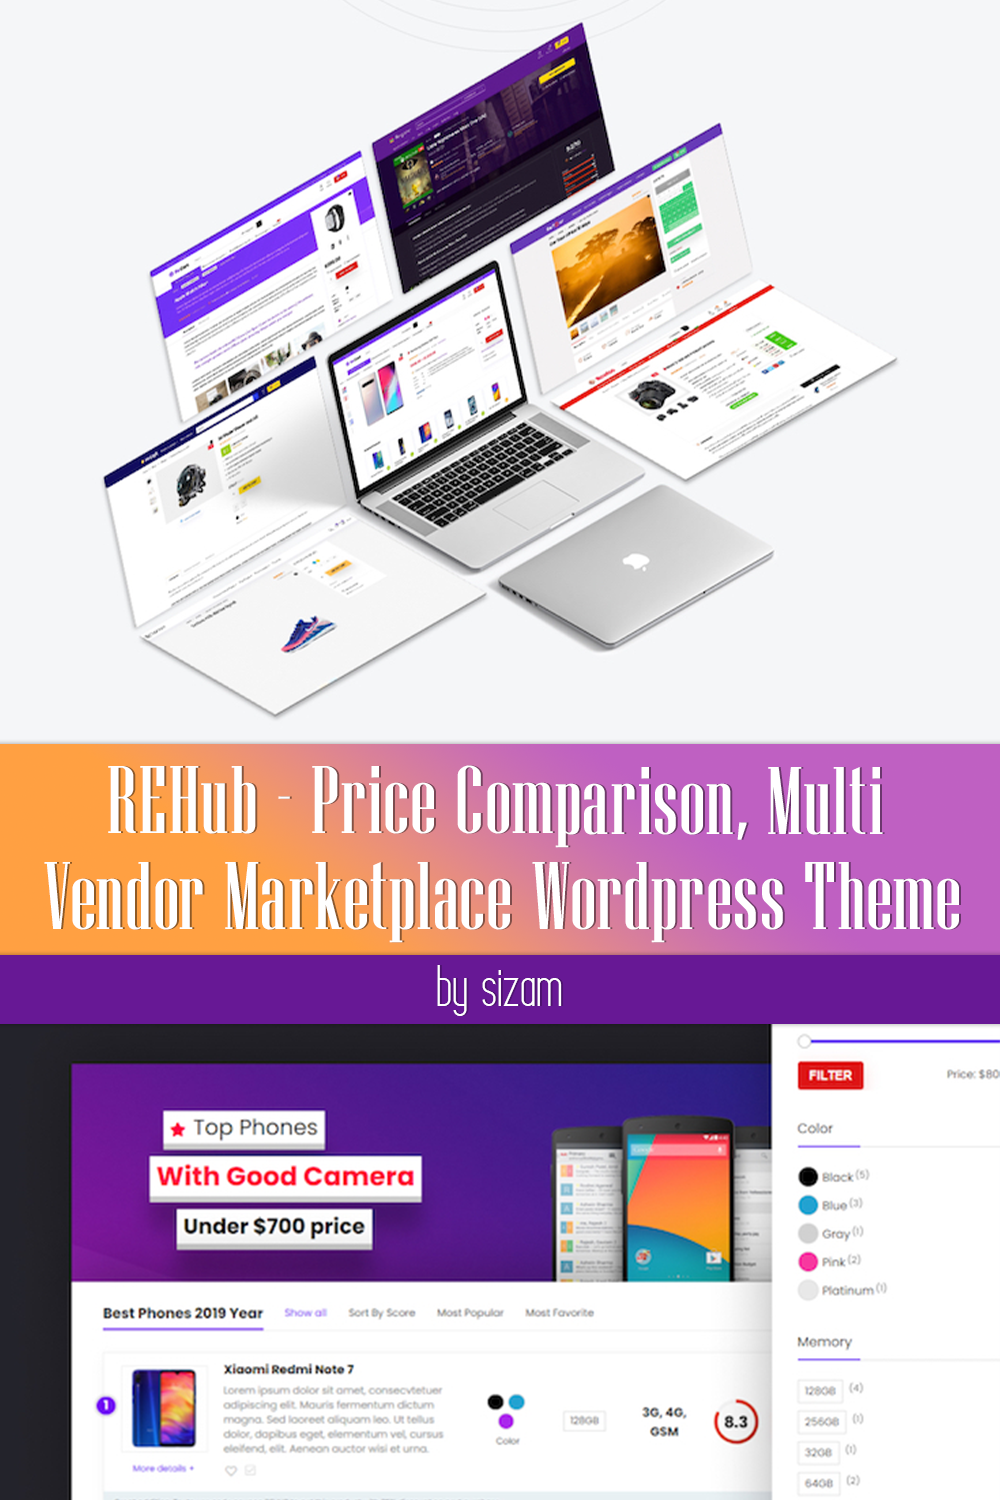 Pinterest of rehub price comparison multi vendor marketplace wordpress theme.